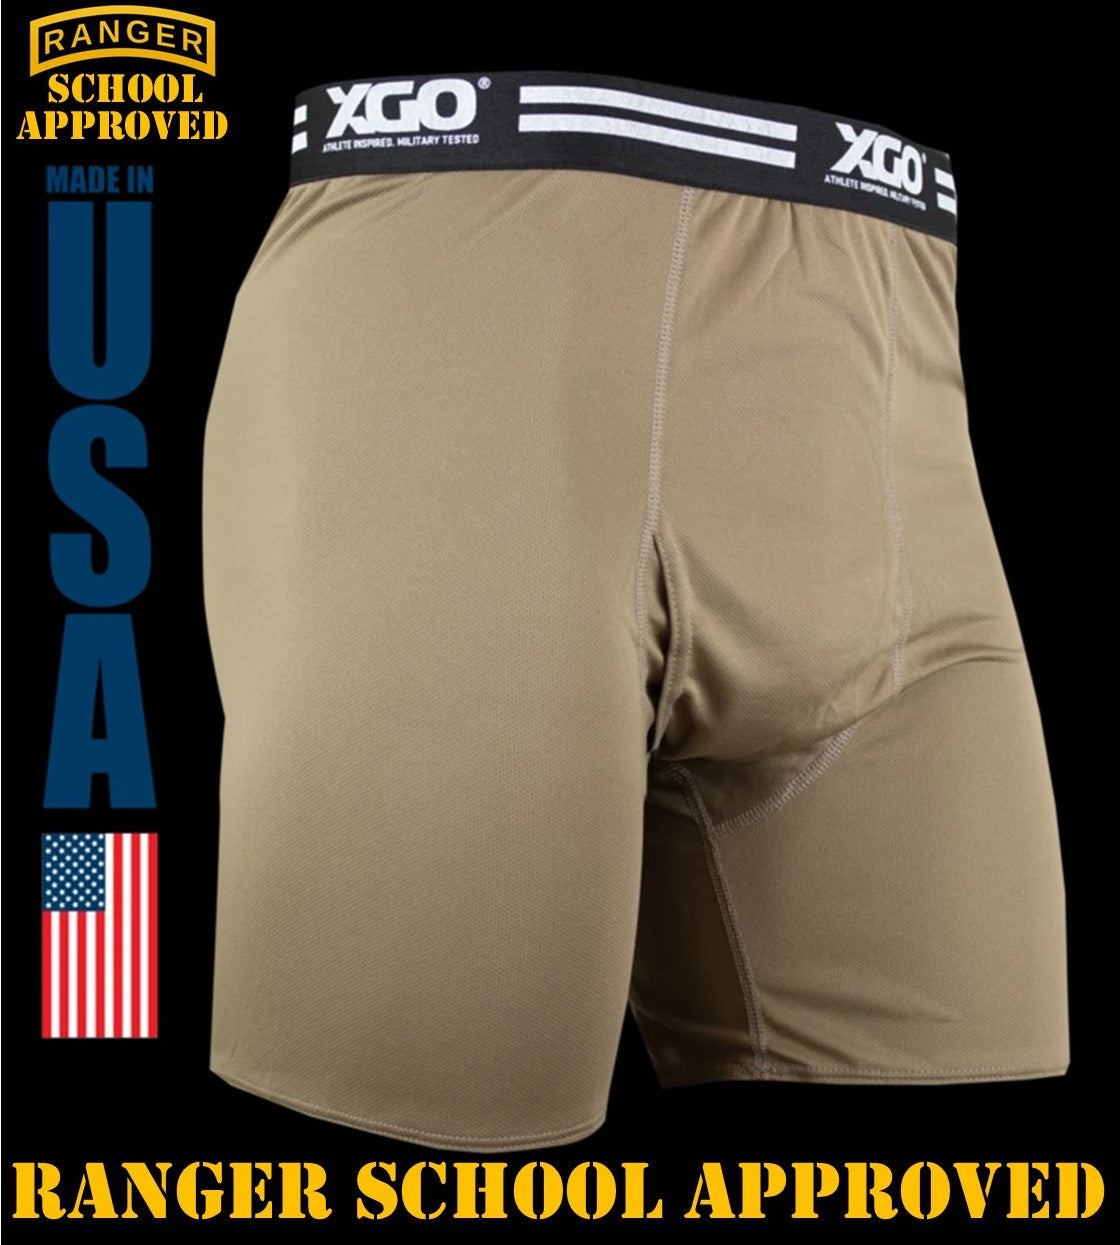 XGO Underwear (Ranger School Approved)